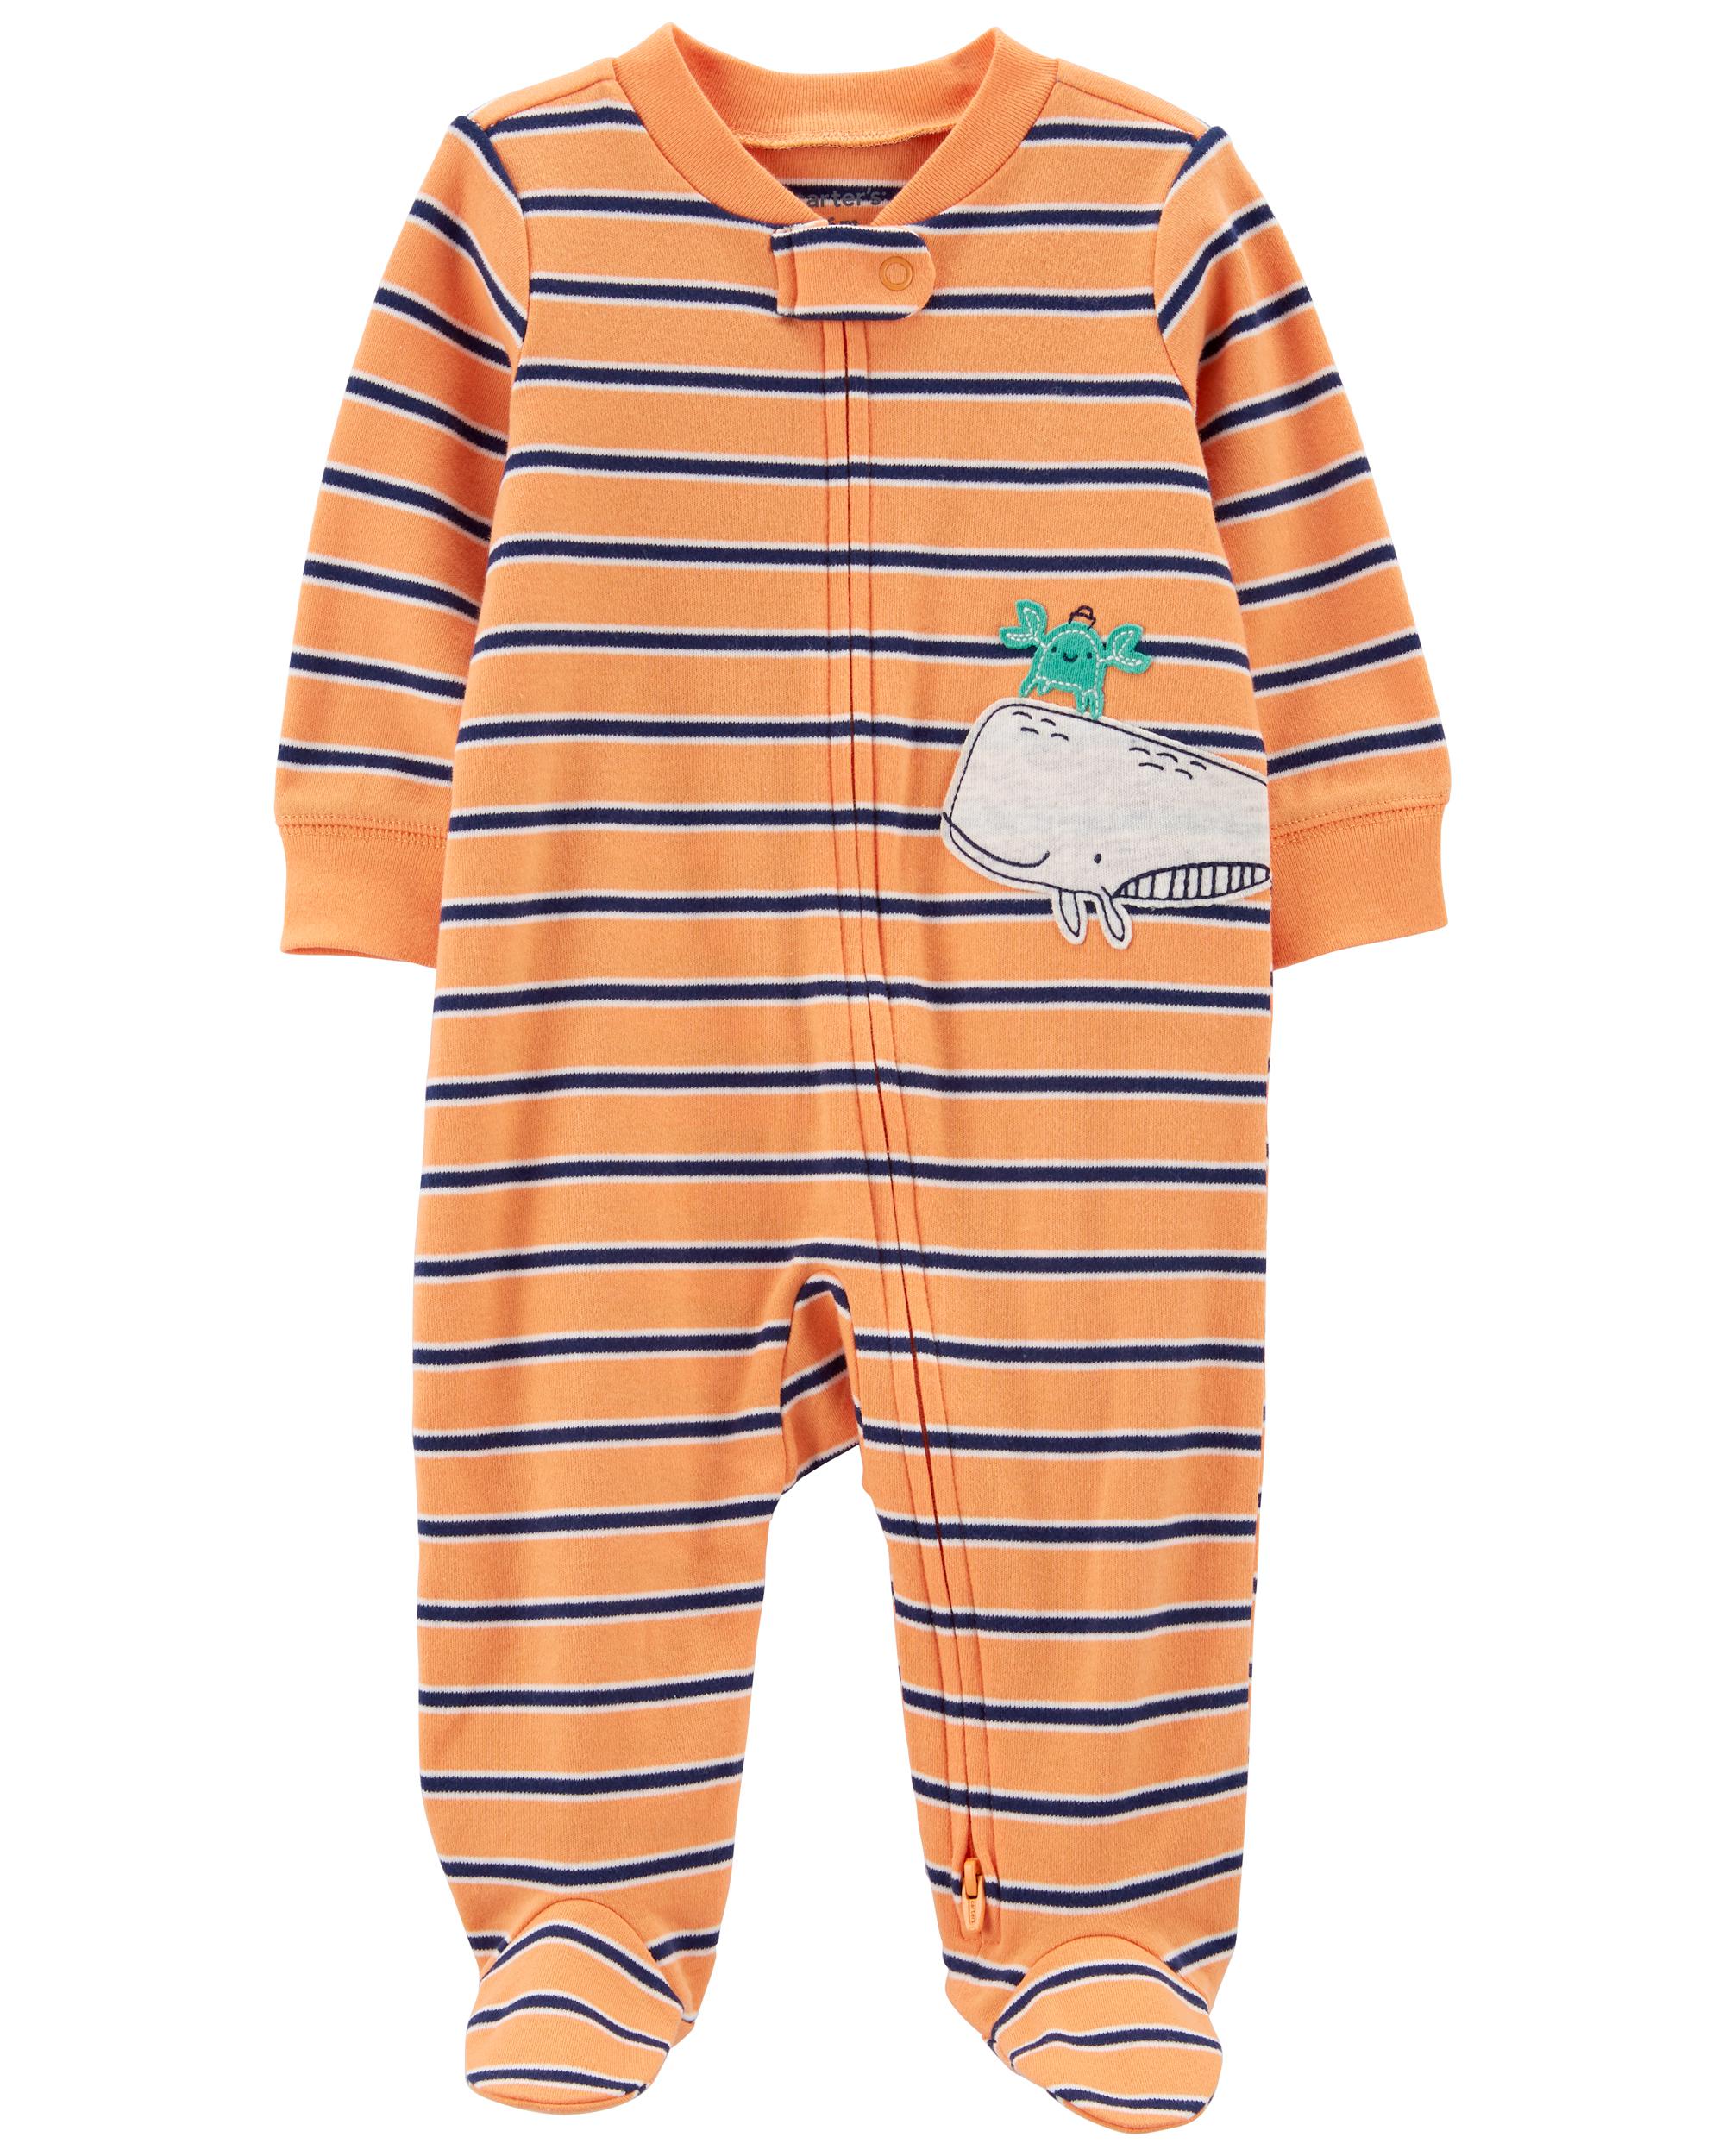 Baby Whale 2-Way Zip Cotton Sleeper Pyjamas